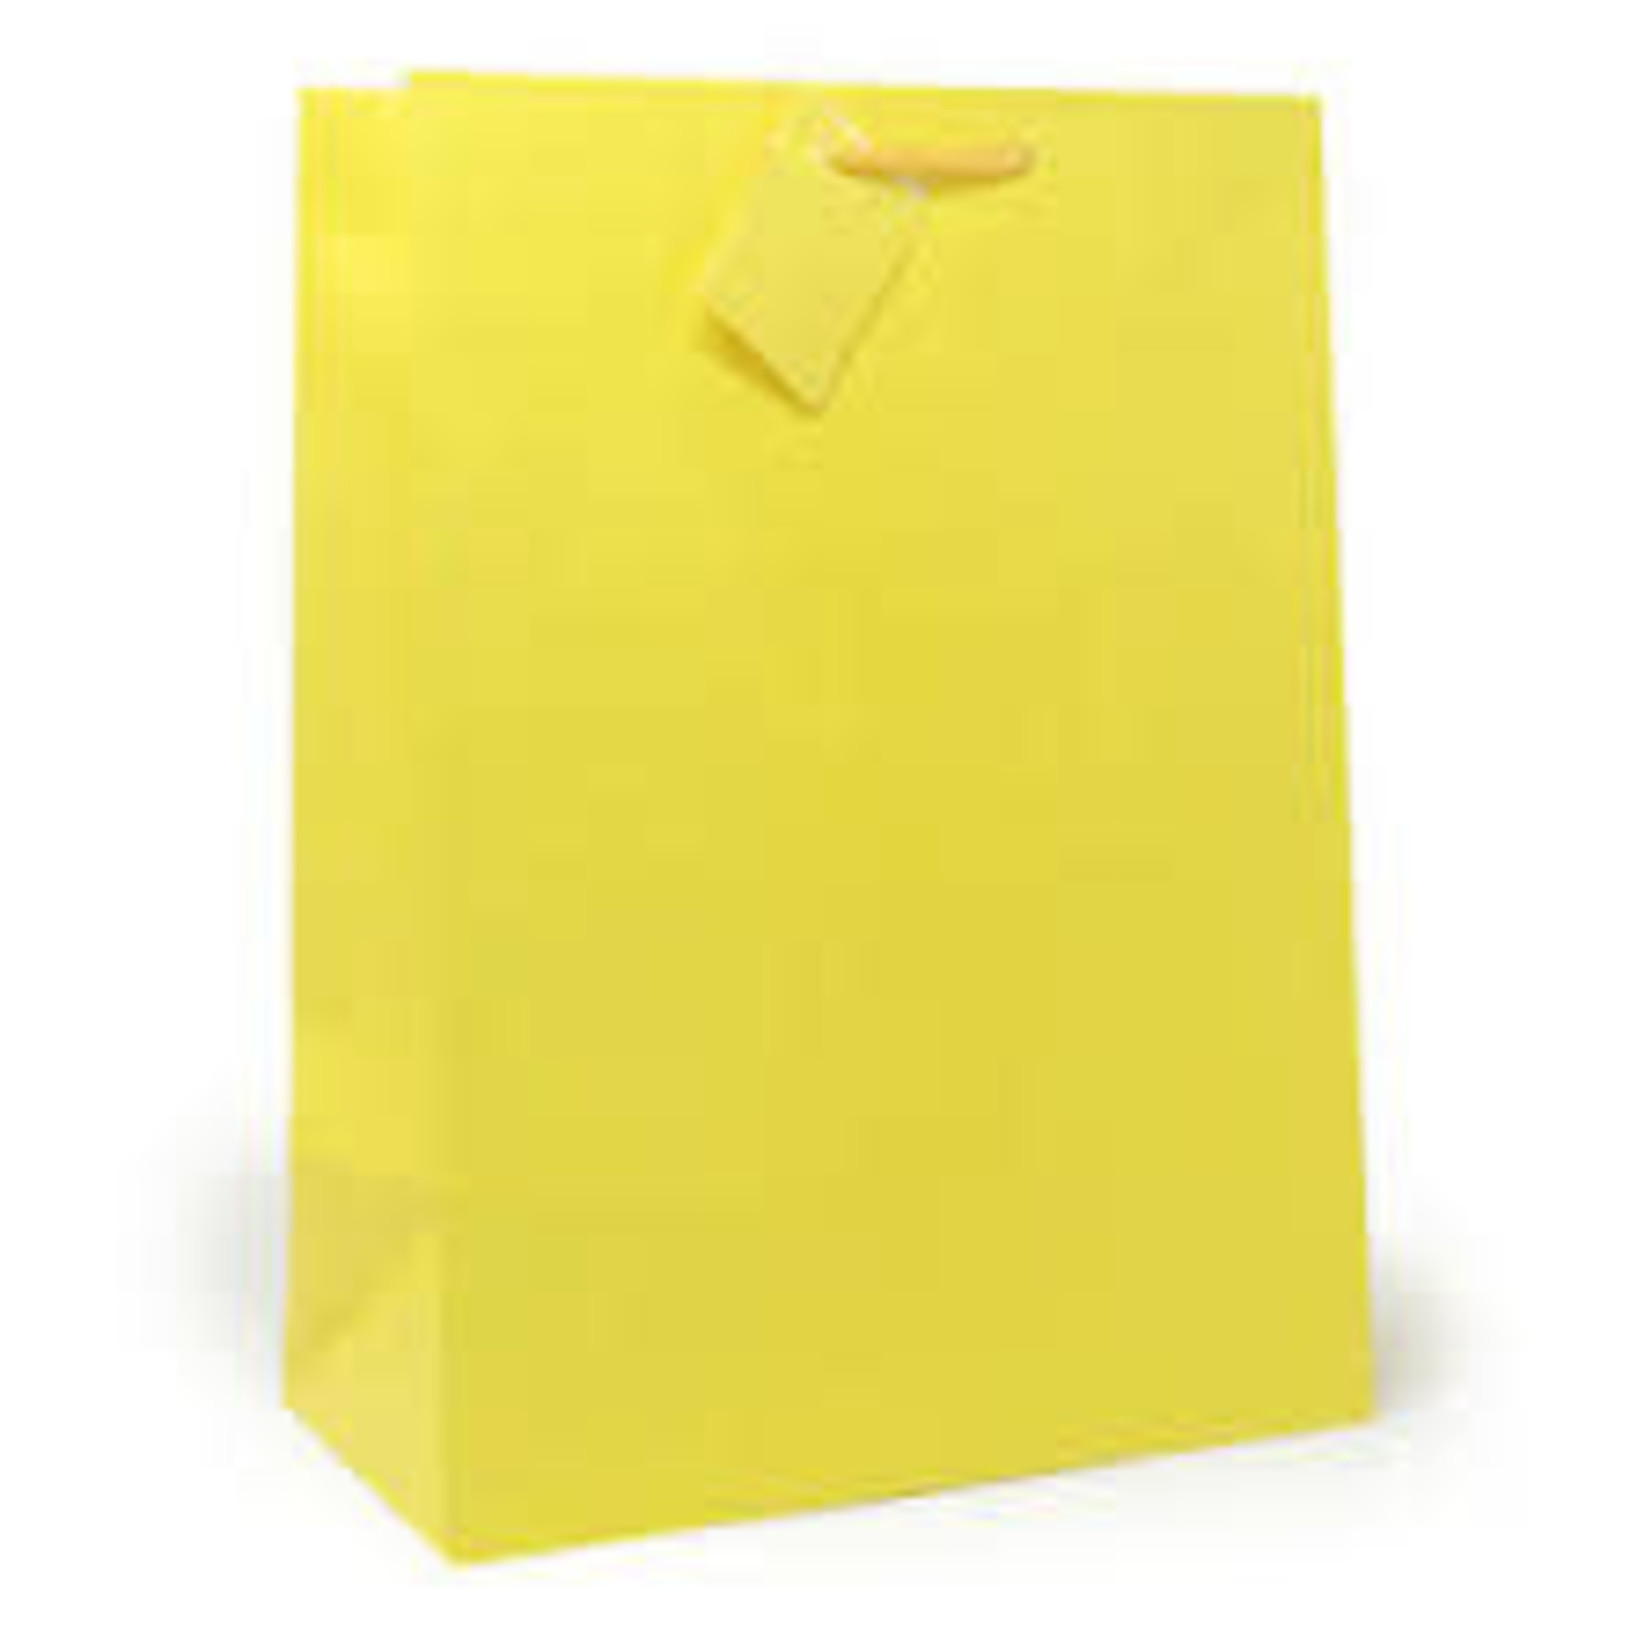 Yellow Gift Bags 12ct